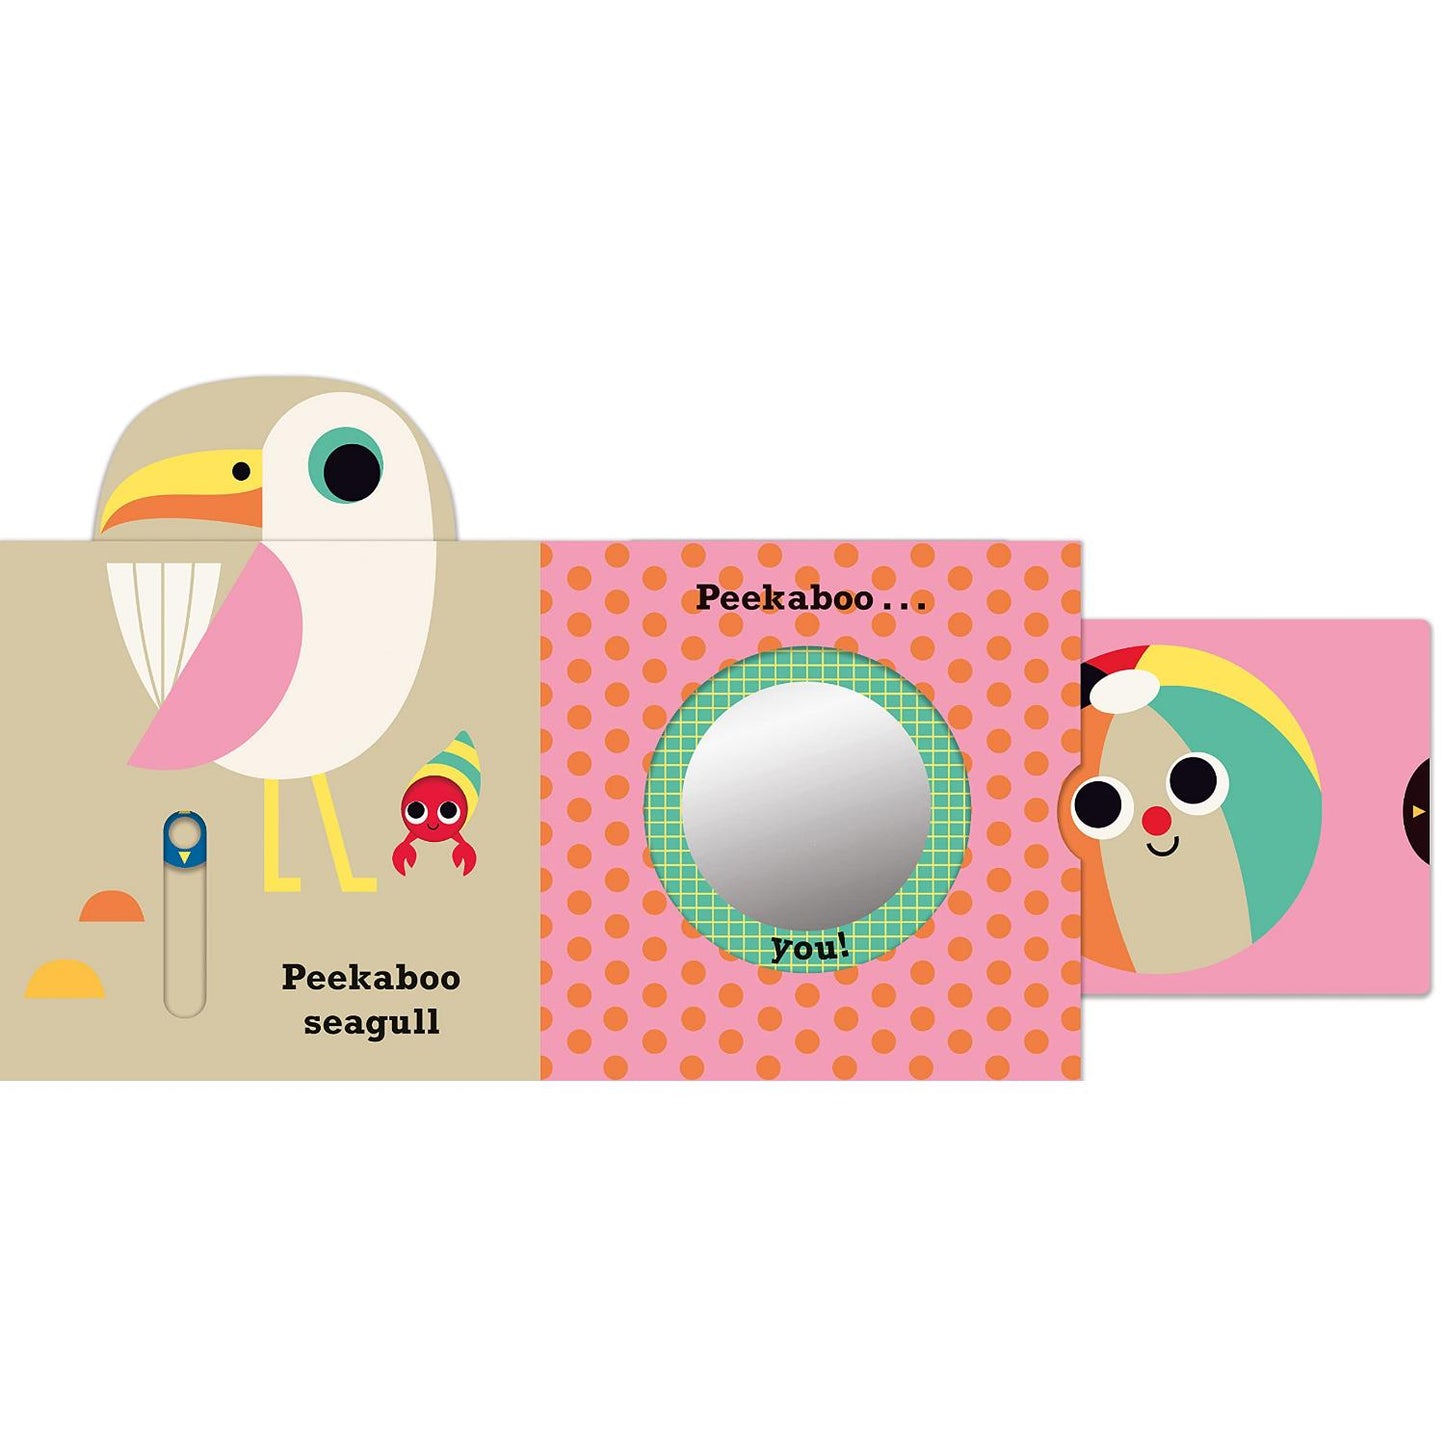 Peekaboo Sun | Interactive Board Book for Babies & Toddlers